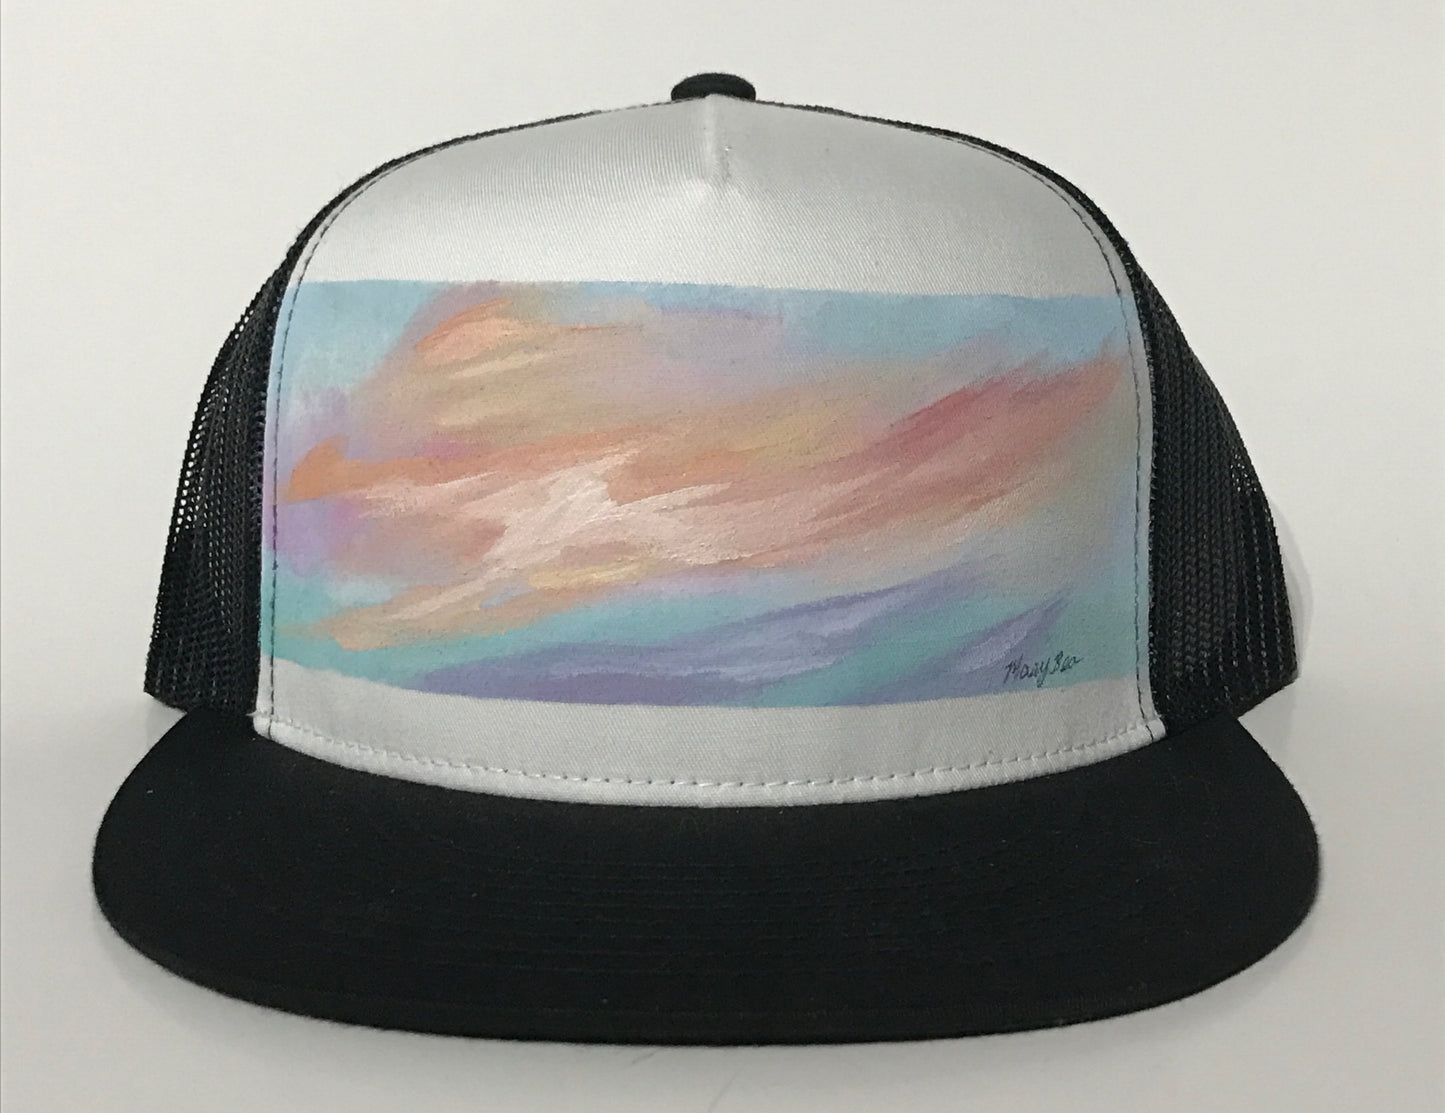 "Skyfire" Hand Painted on Black Trucker Snapback Hat